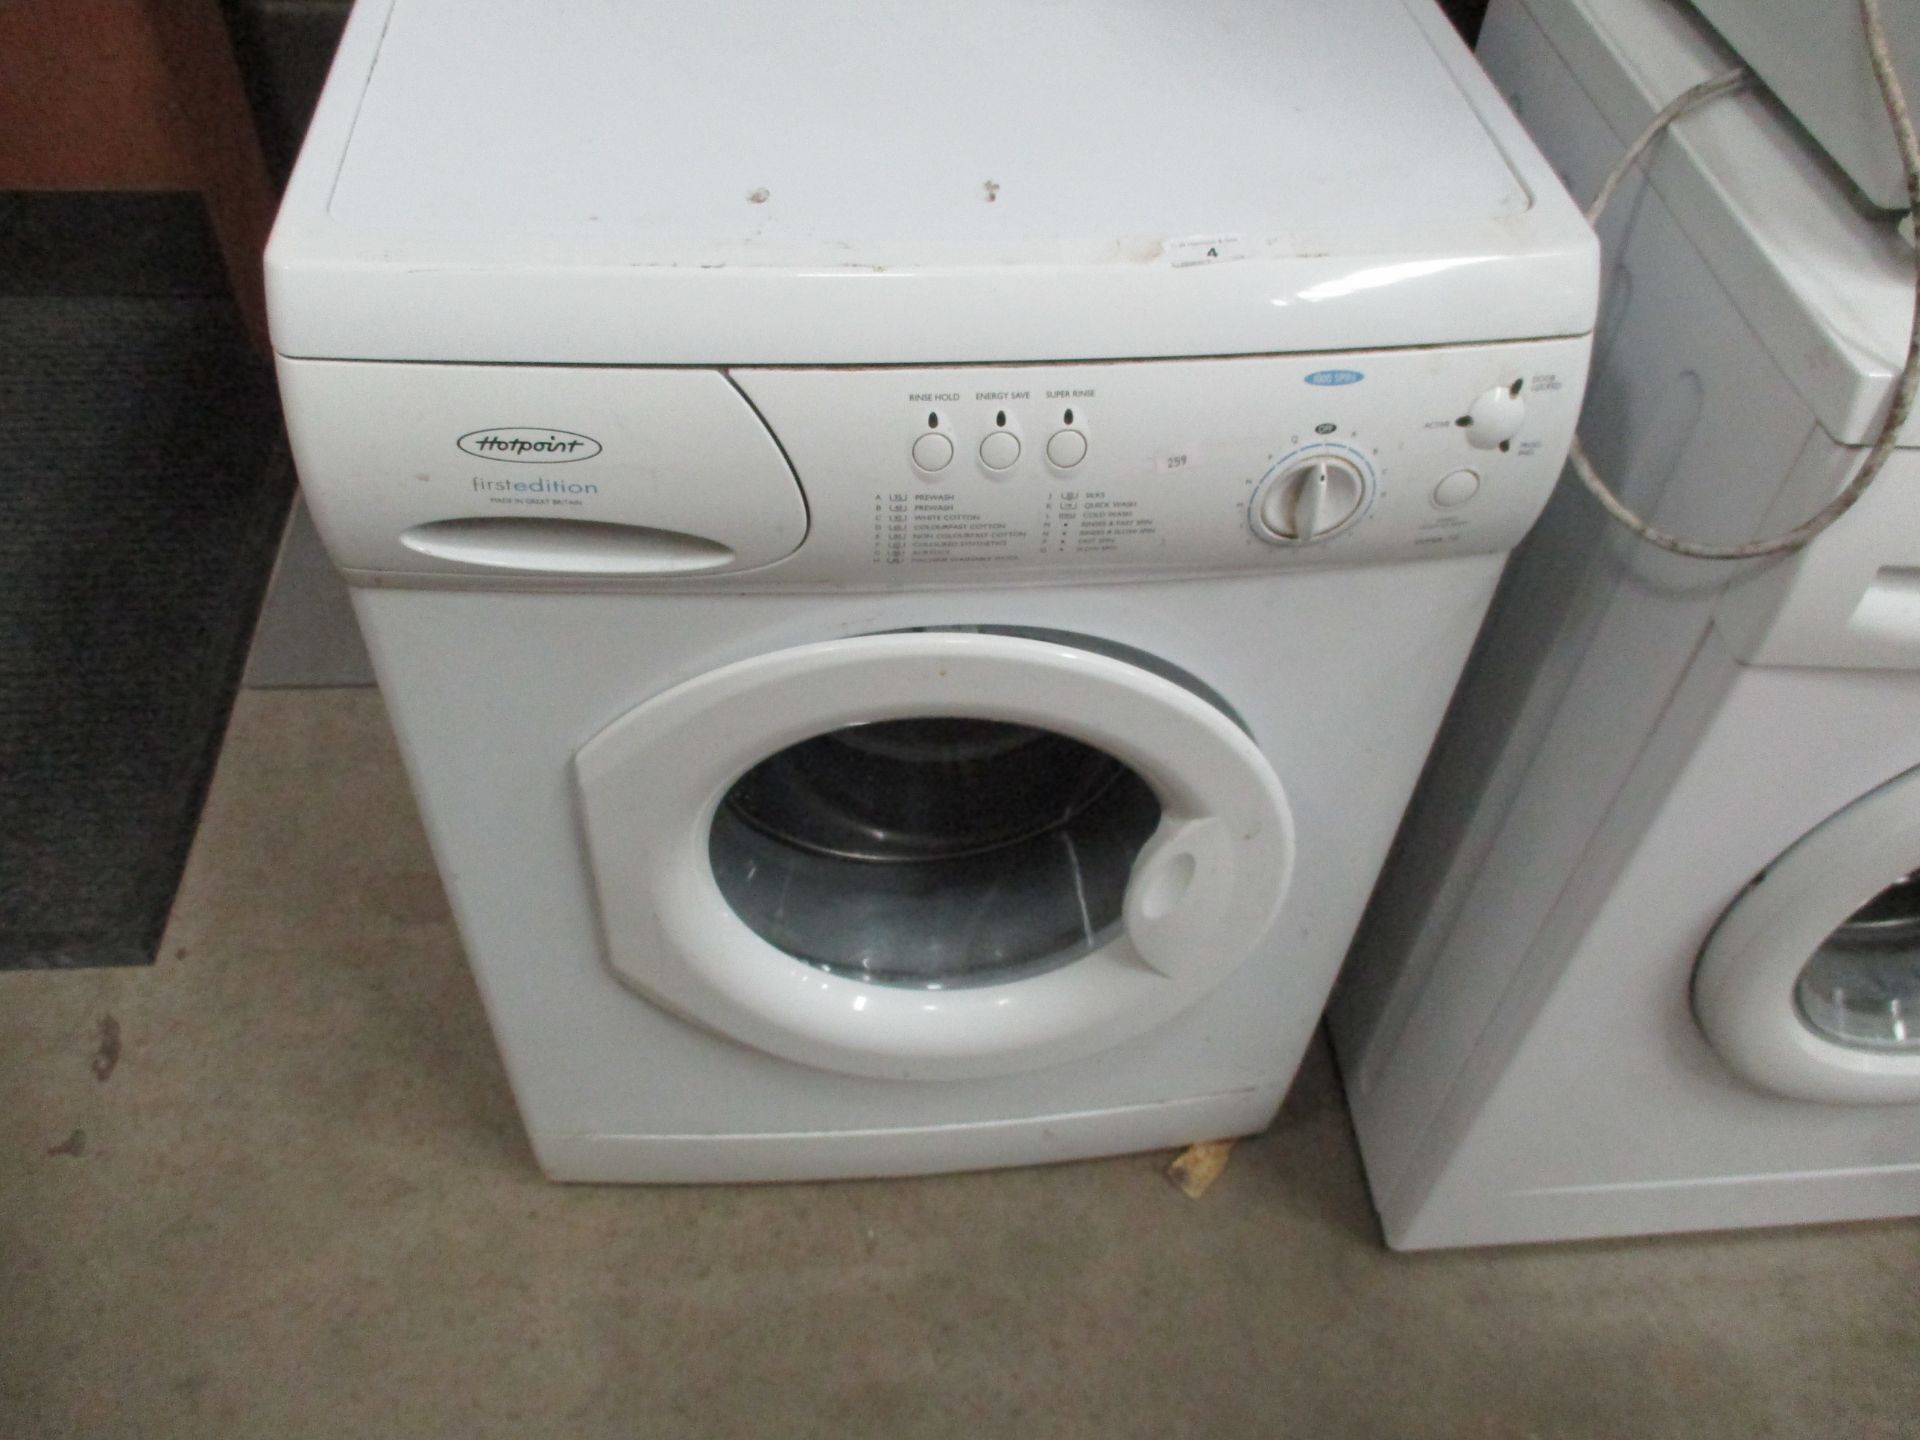 A Hotpoint WMA10 first edition washing machine